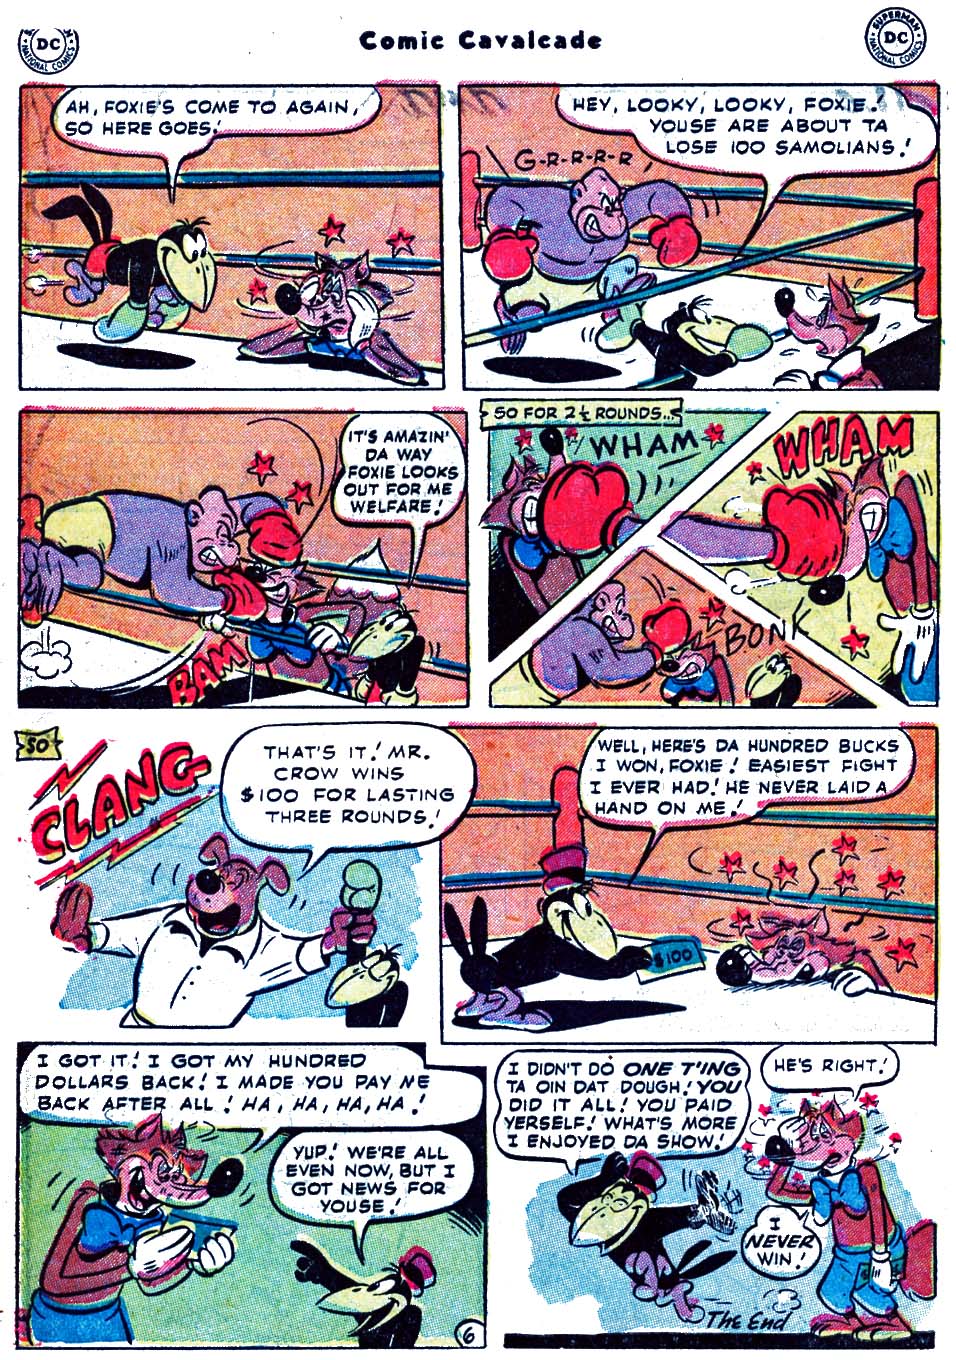 Comic Cavalcade issue 55 - Page 8